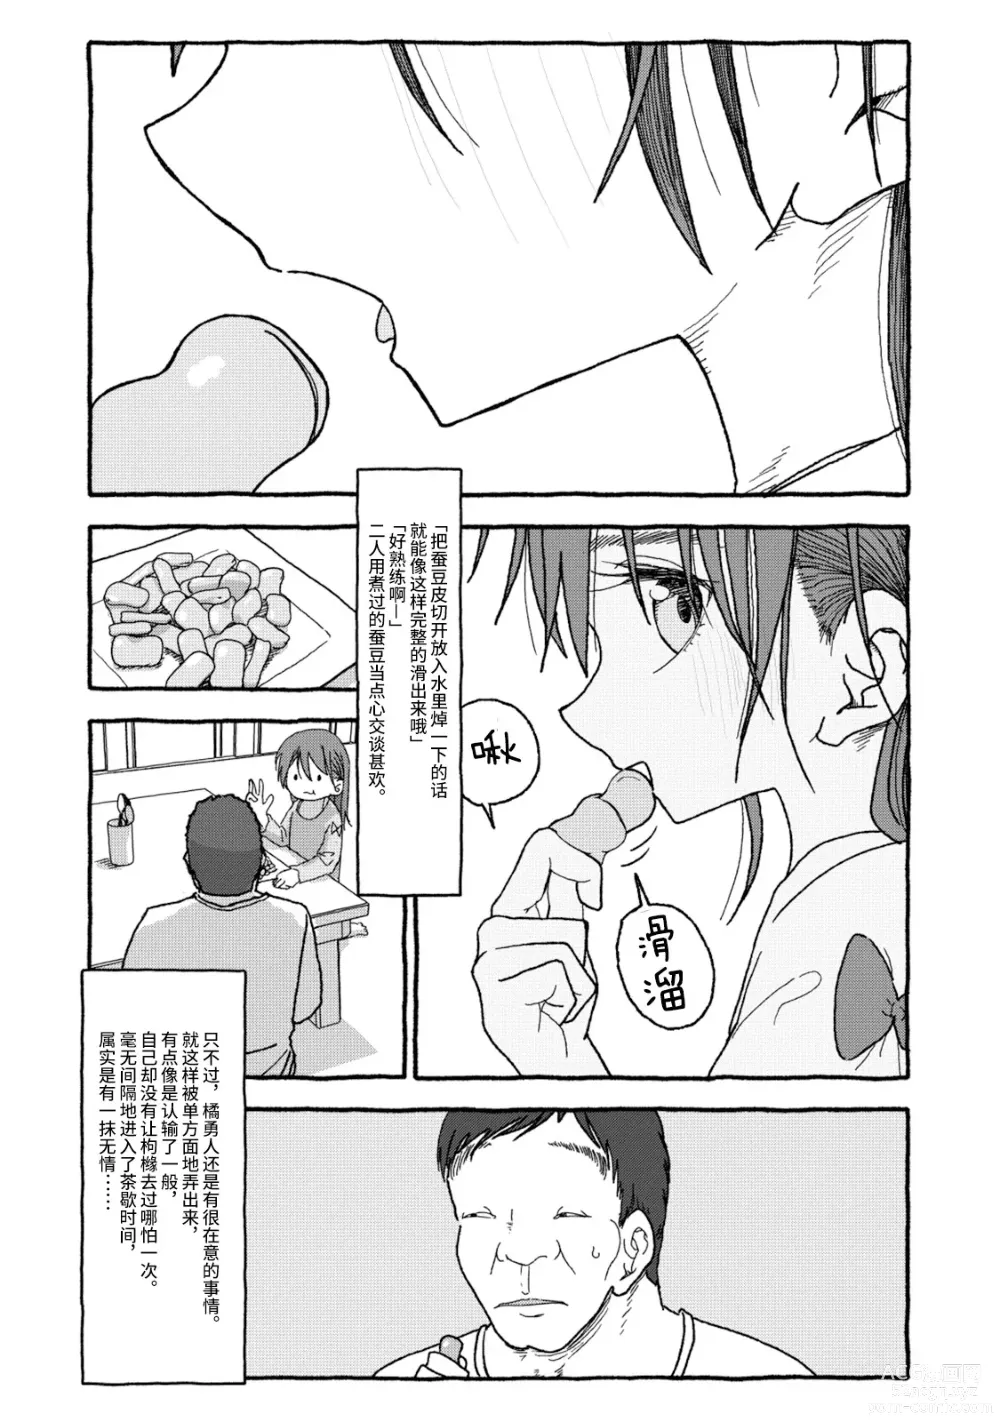 Page 3 of doujinshi 相遇四光年后合体 中篇